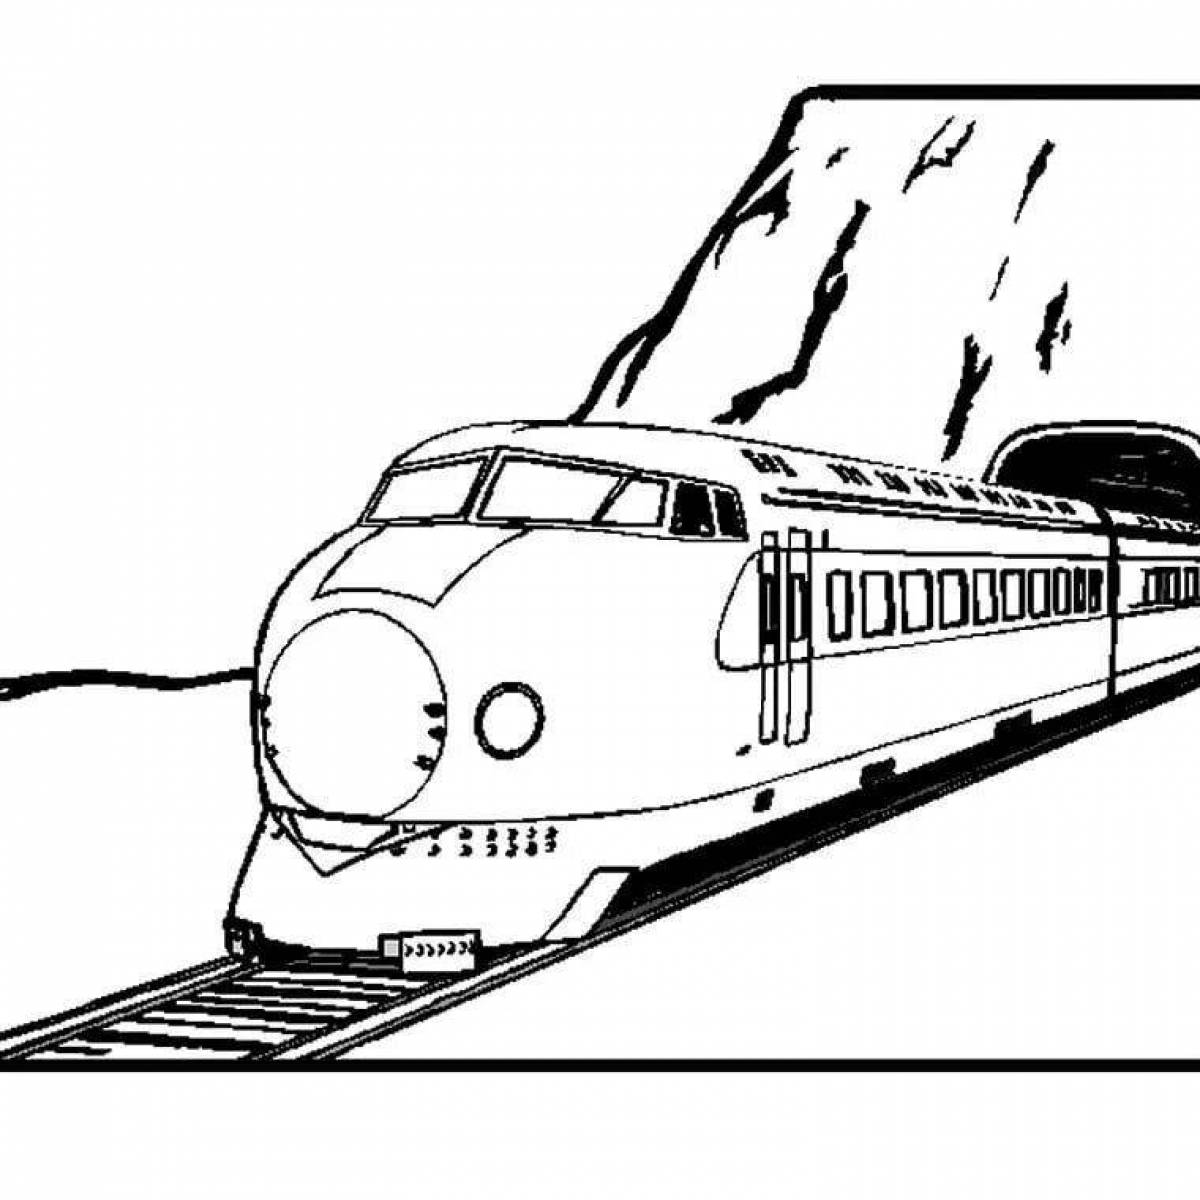 Charming passenger train coloring book